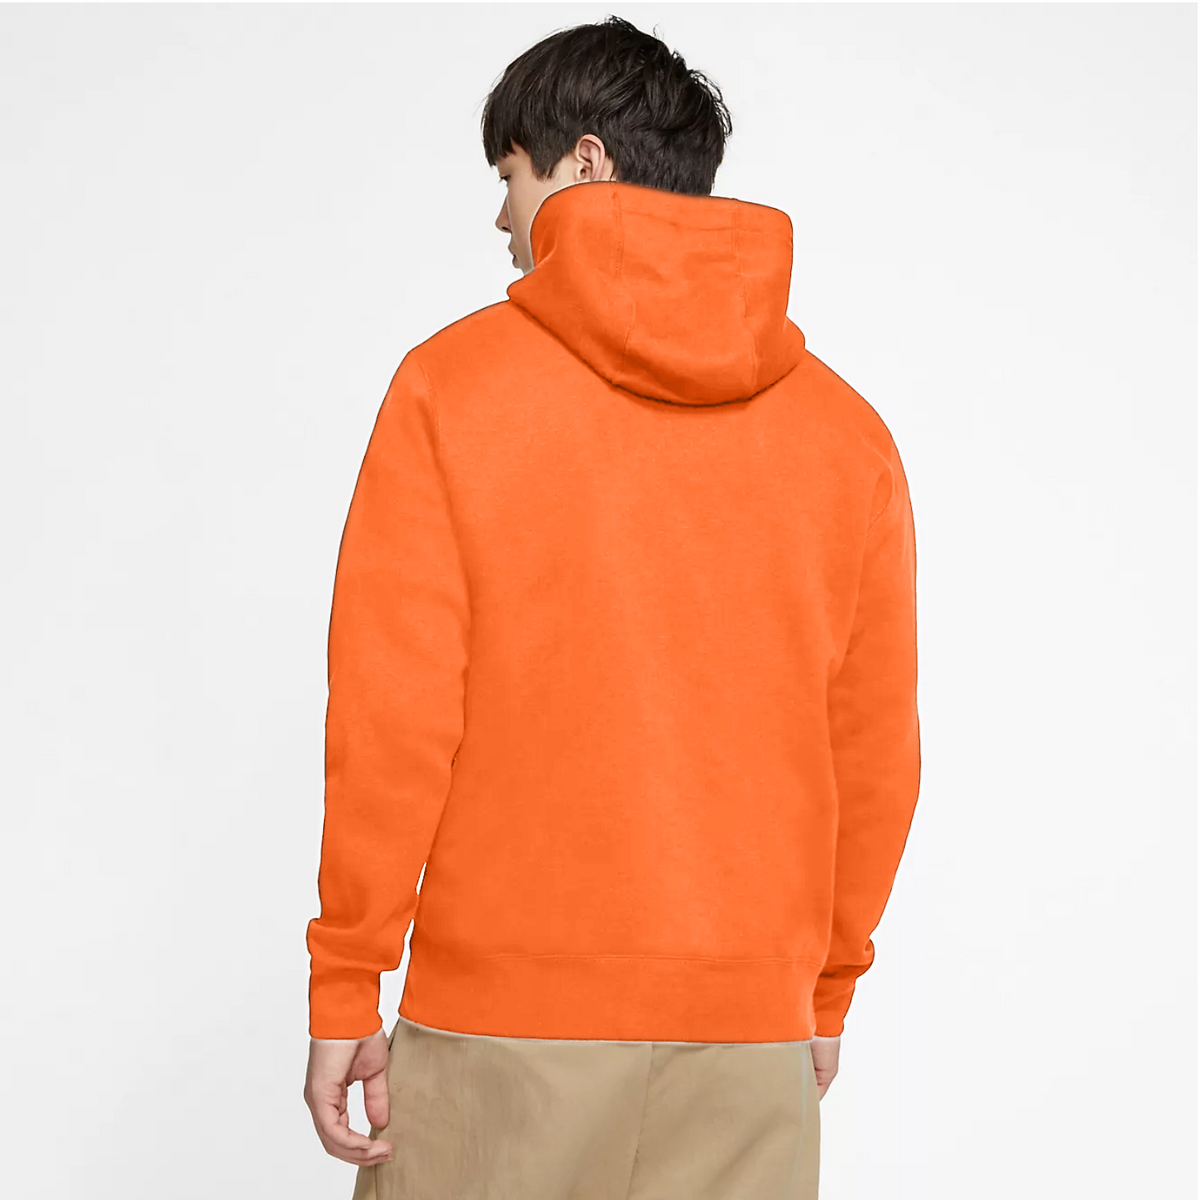 Kingdom GB Club Hooded Sweatshirt Hoodie Orange